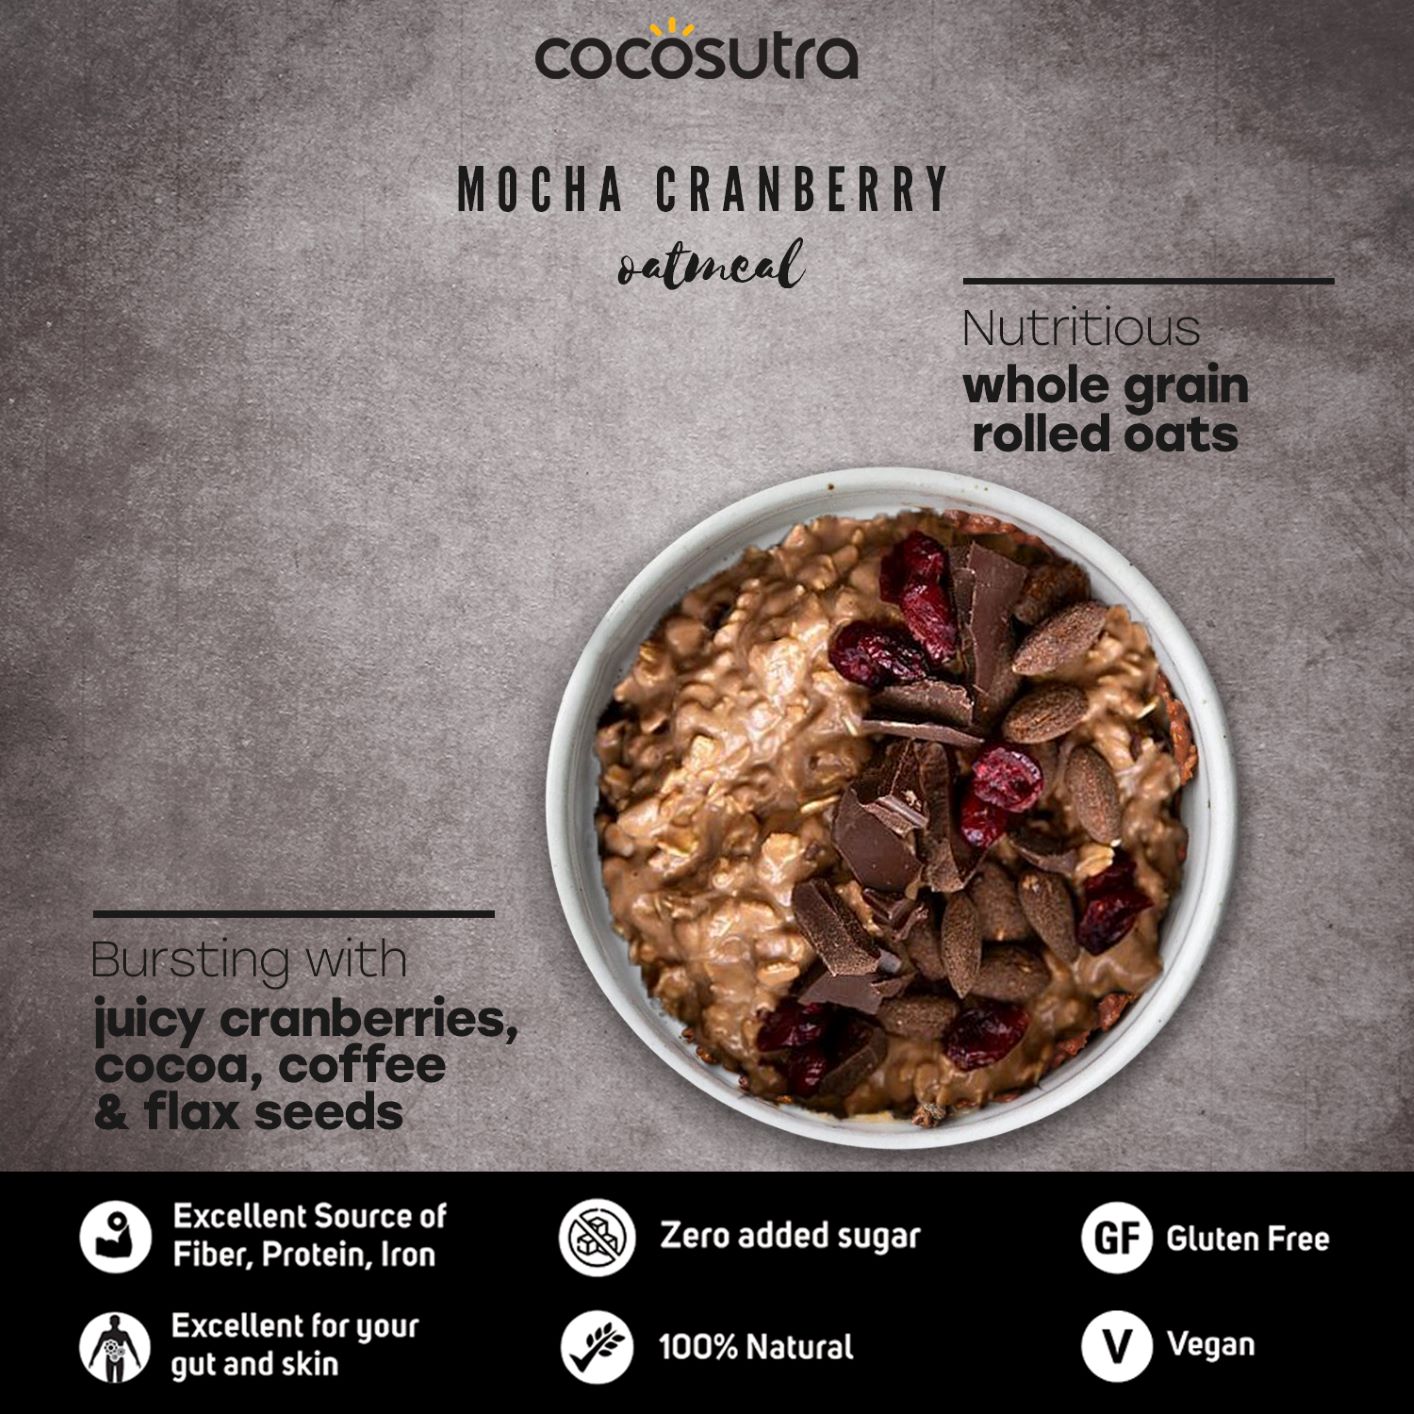 Mocha Cranberry Oatmeal Benefits